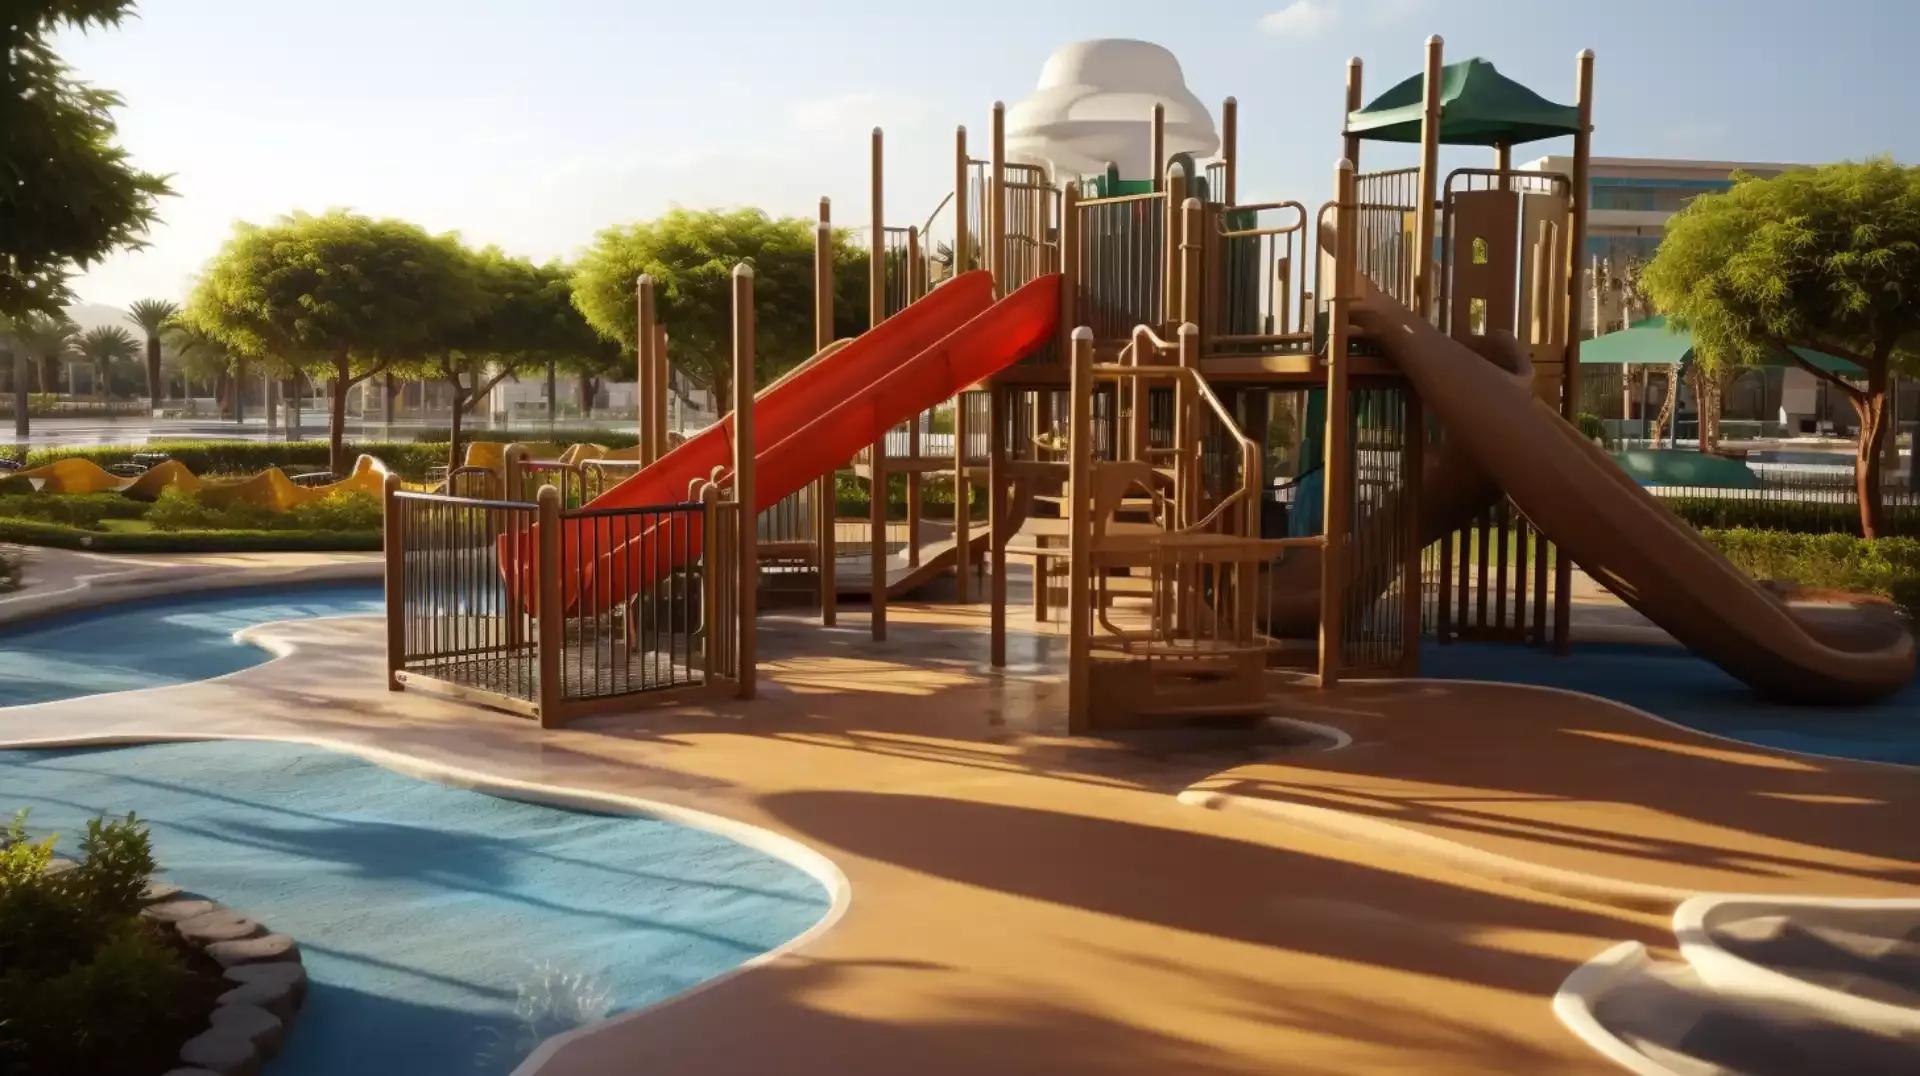 Explore JLT Park - Children's Play Zone and Swings  